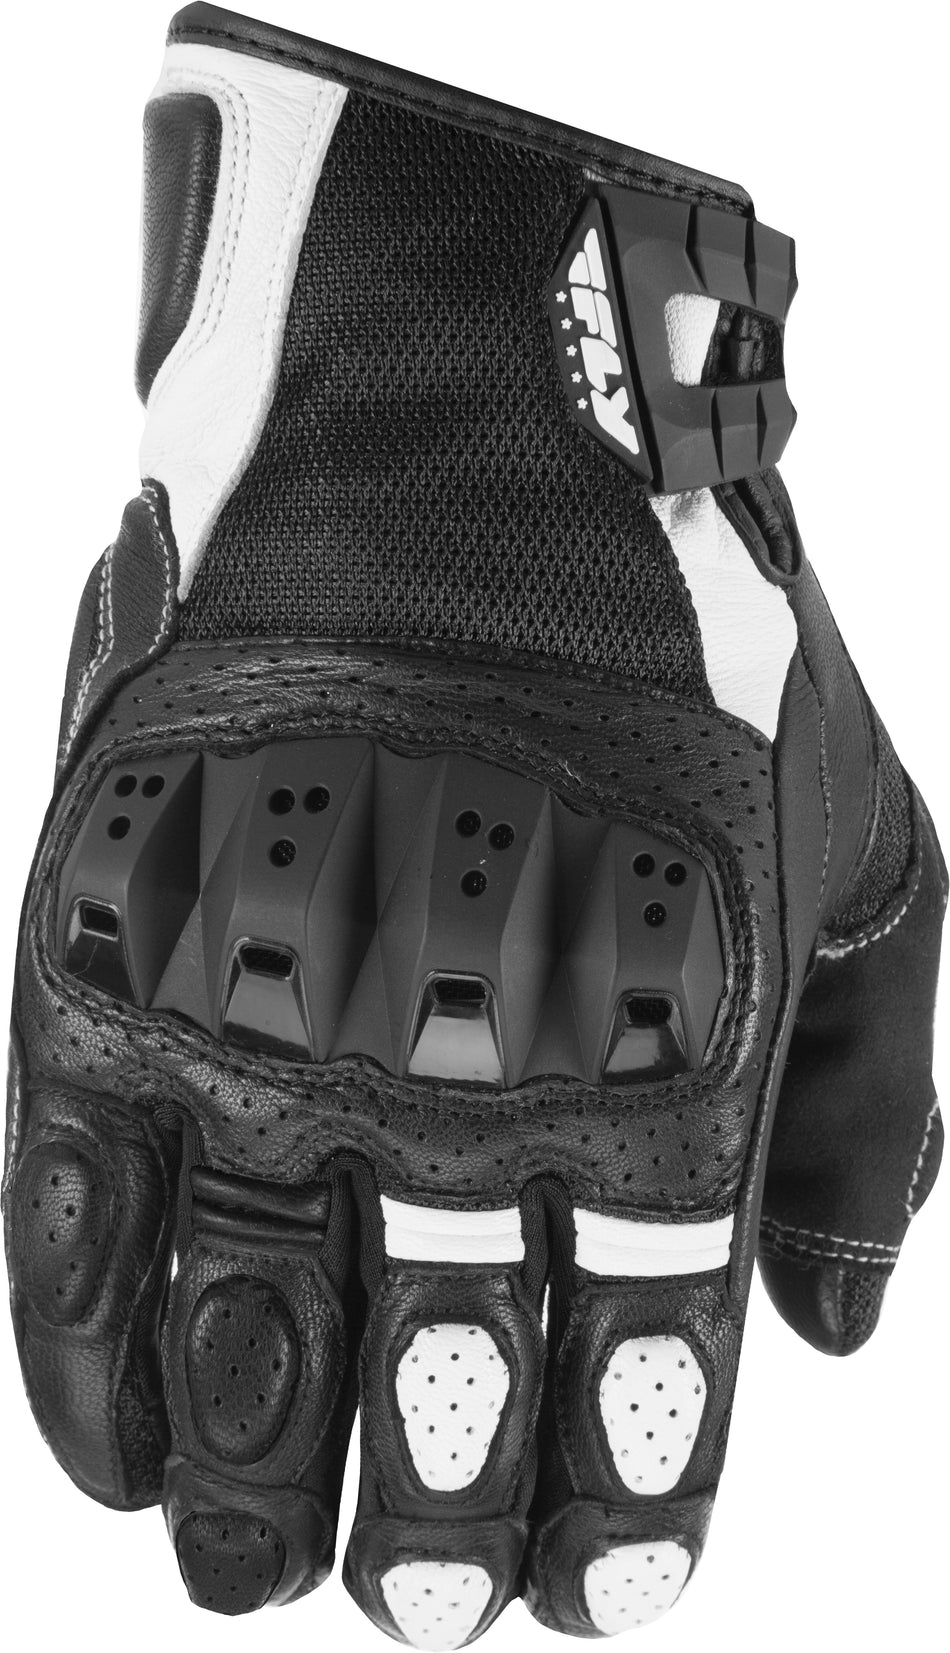 FLY RACING Brawler Gloves Black/White Xl #5884 476-2045~5